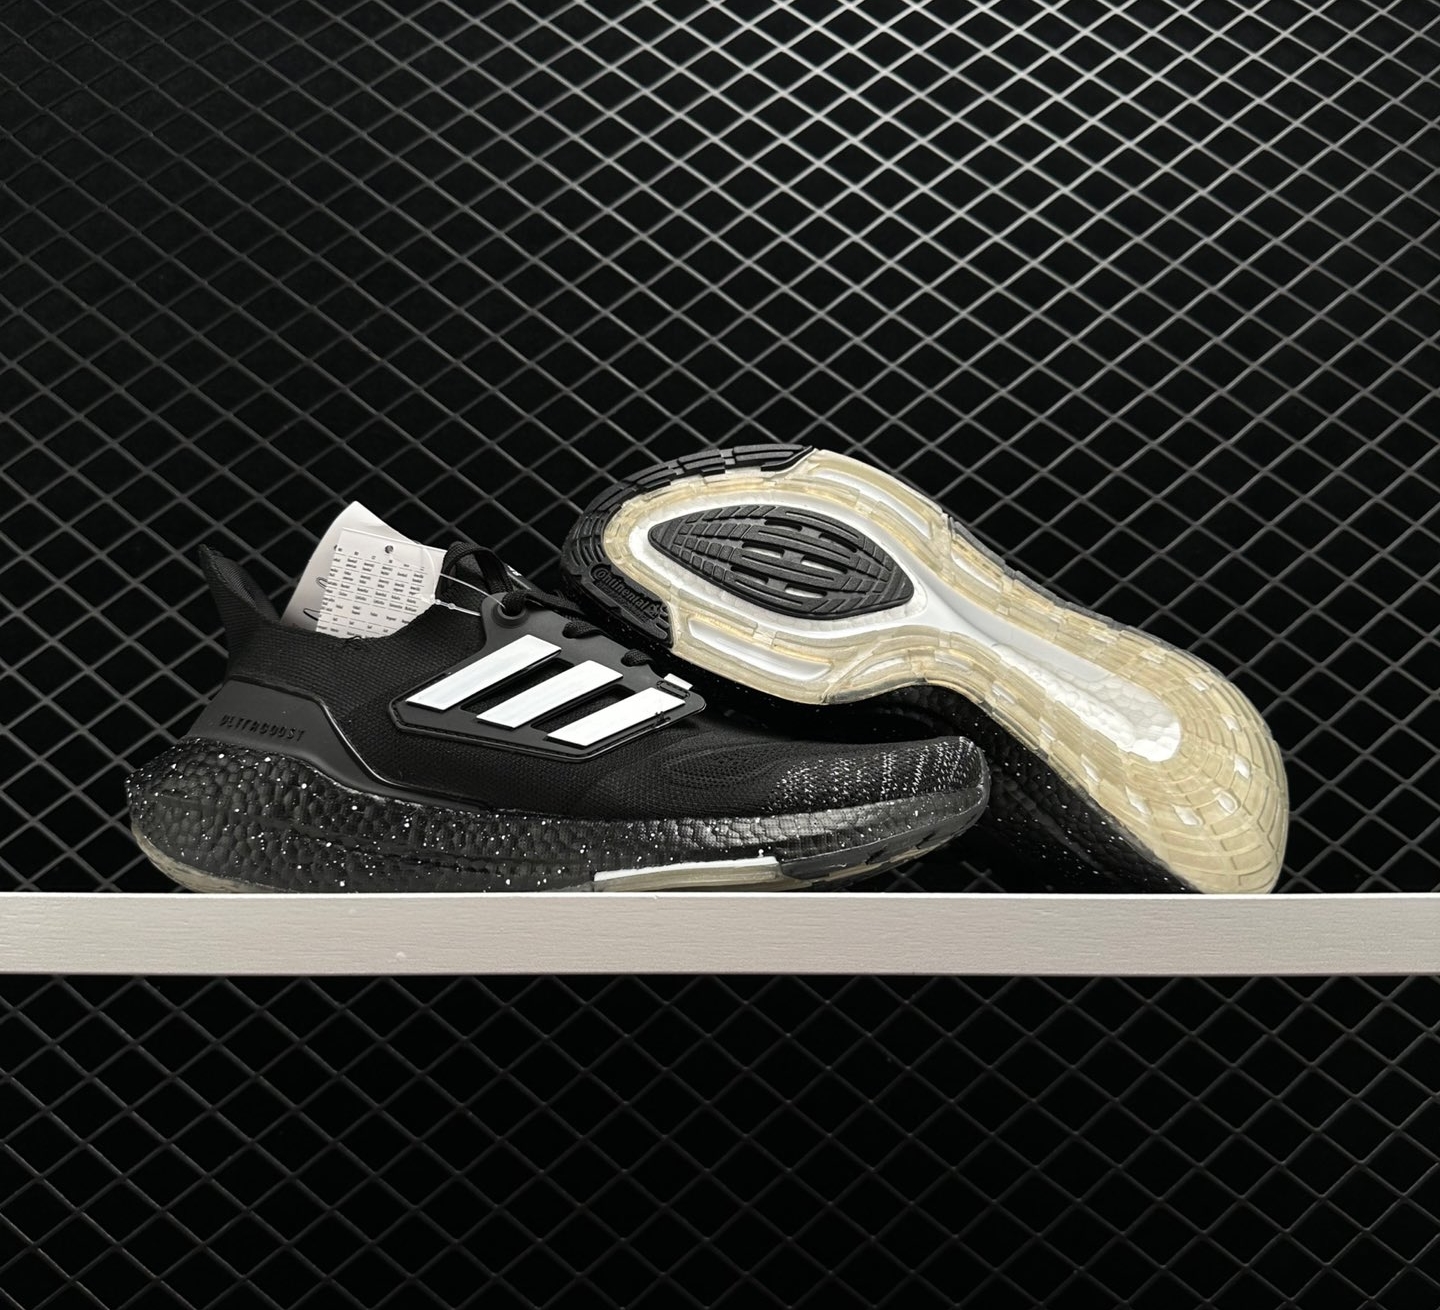 Adidas UltraBoost 22 Black White Speckled - Premium Footwear at Its Best!